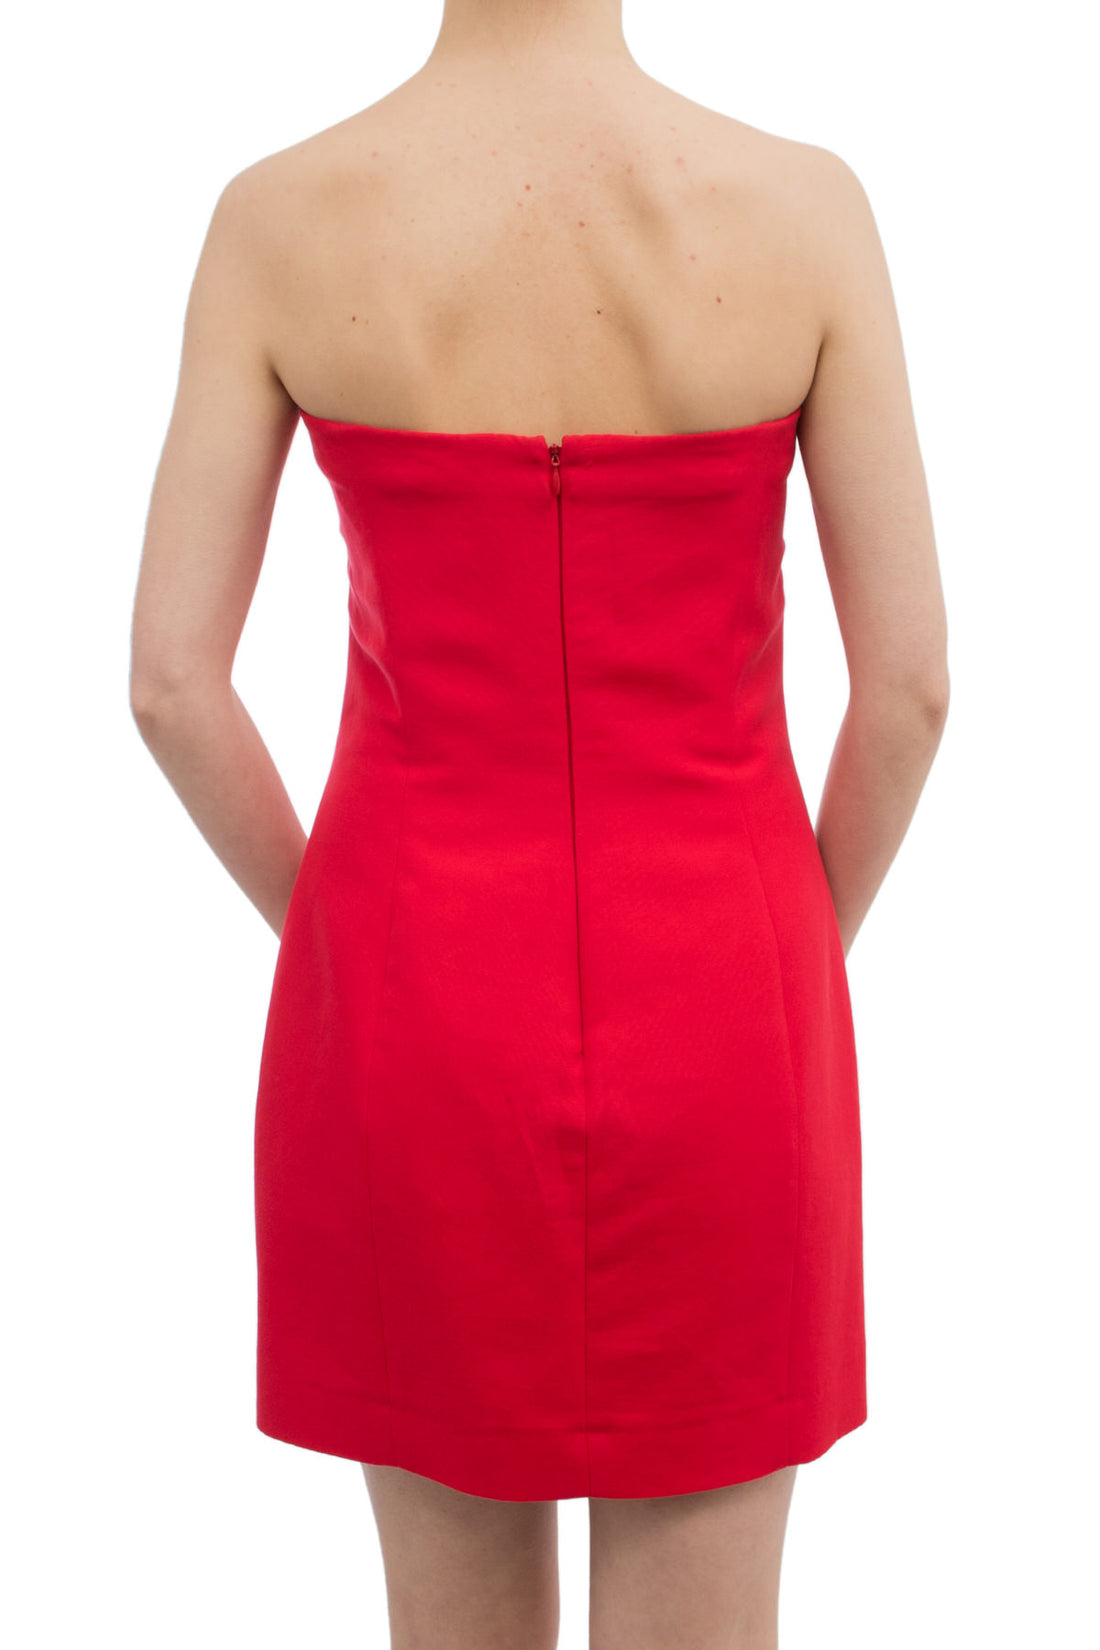 D Squared Red Strapless Mini Dress